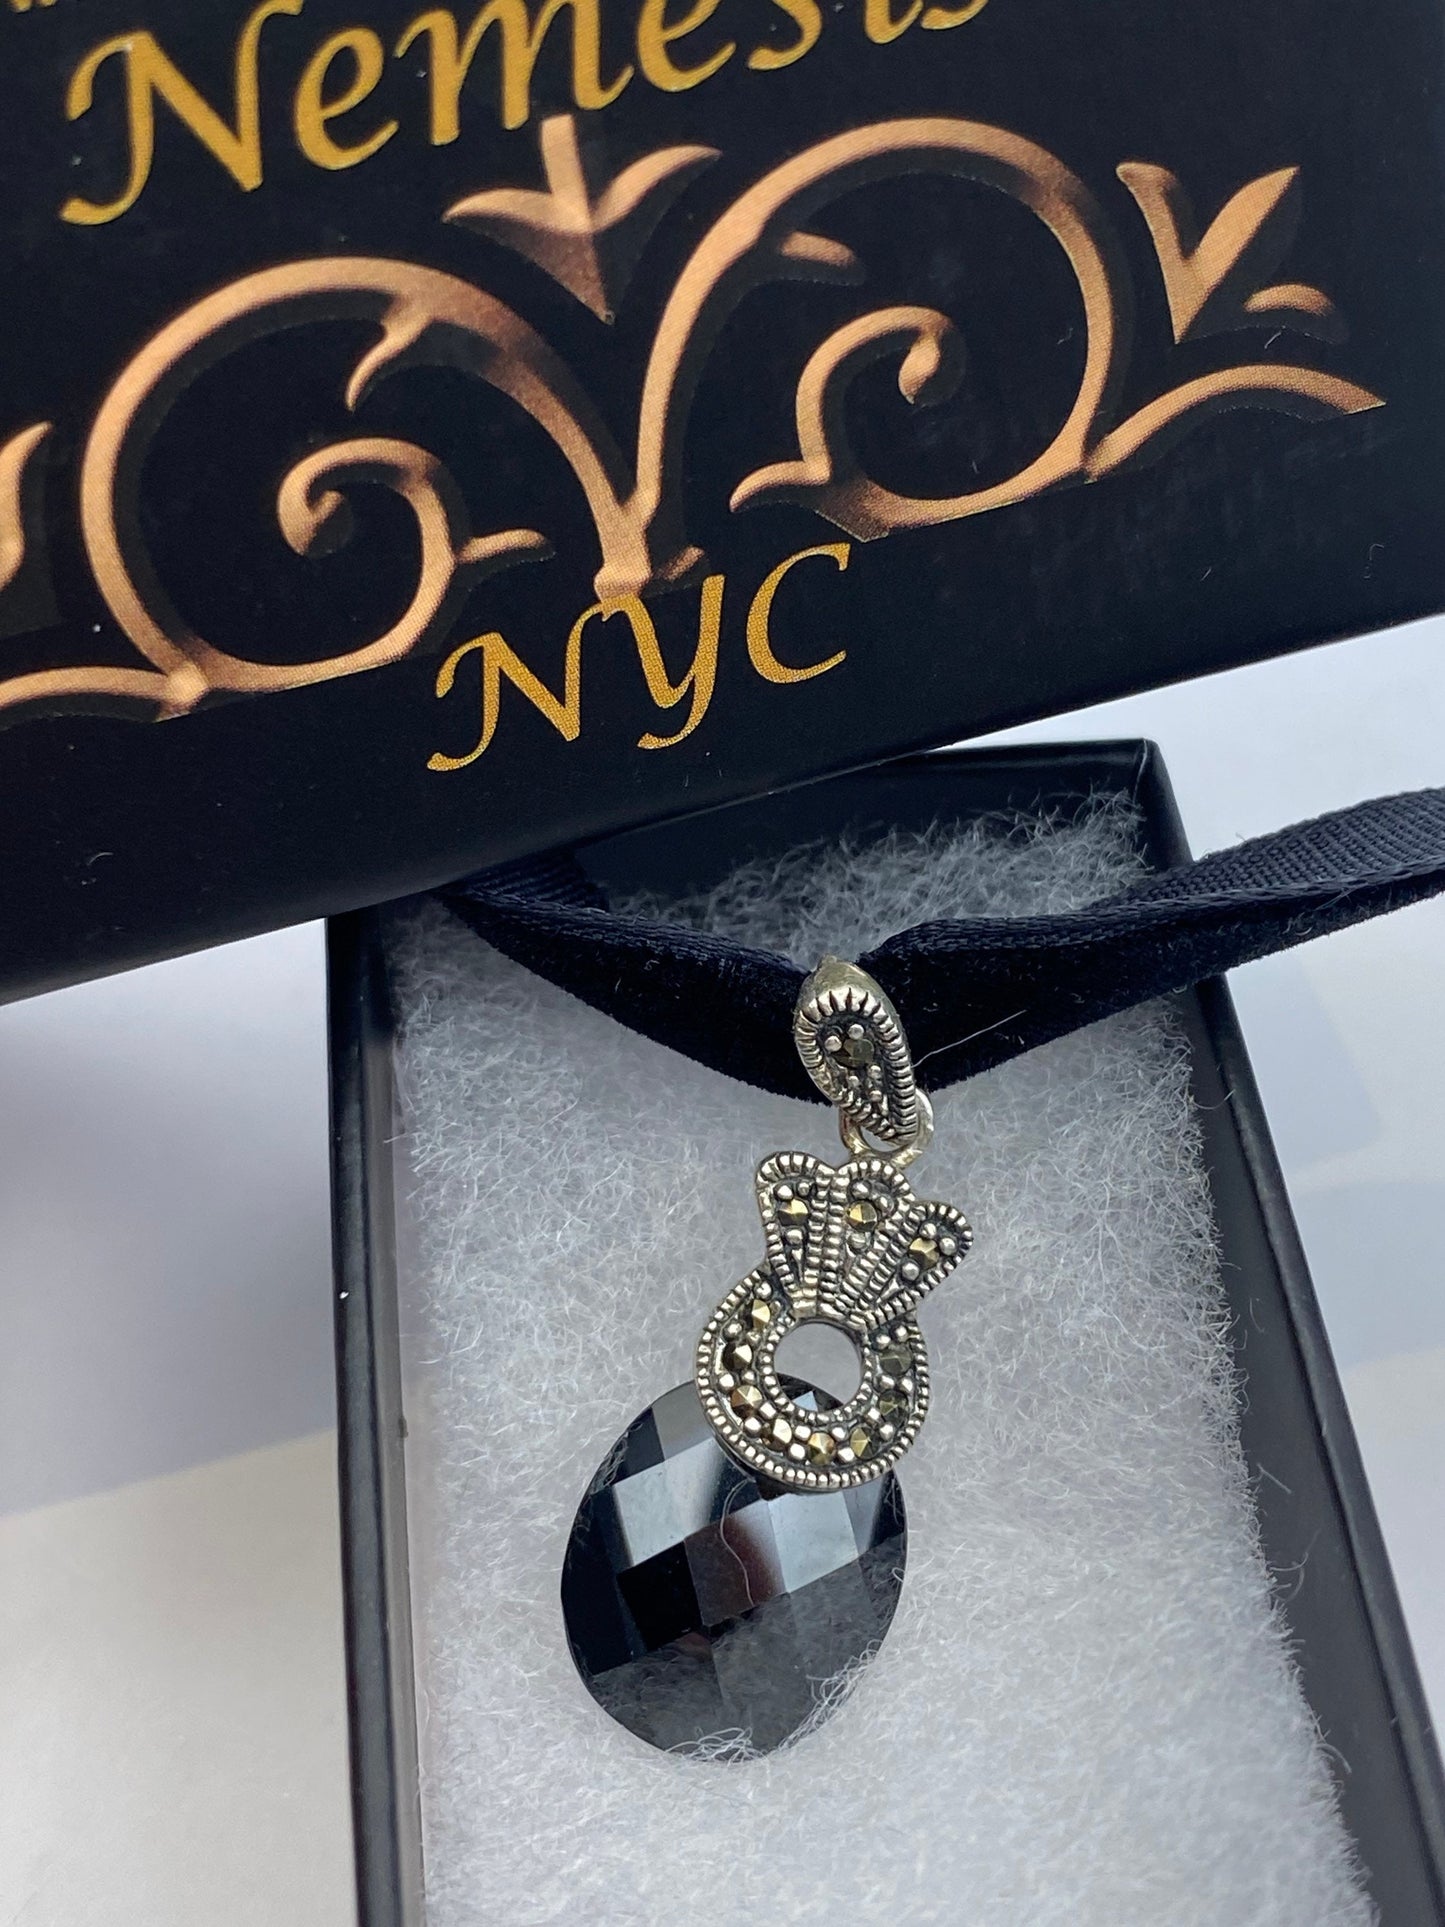 Vintage Marcasite Choker 925 Sterling Silver Black Onyx Pendant Necklace